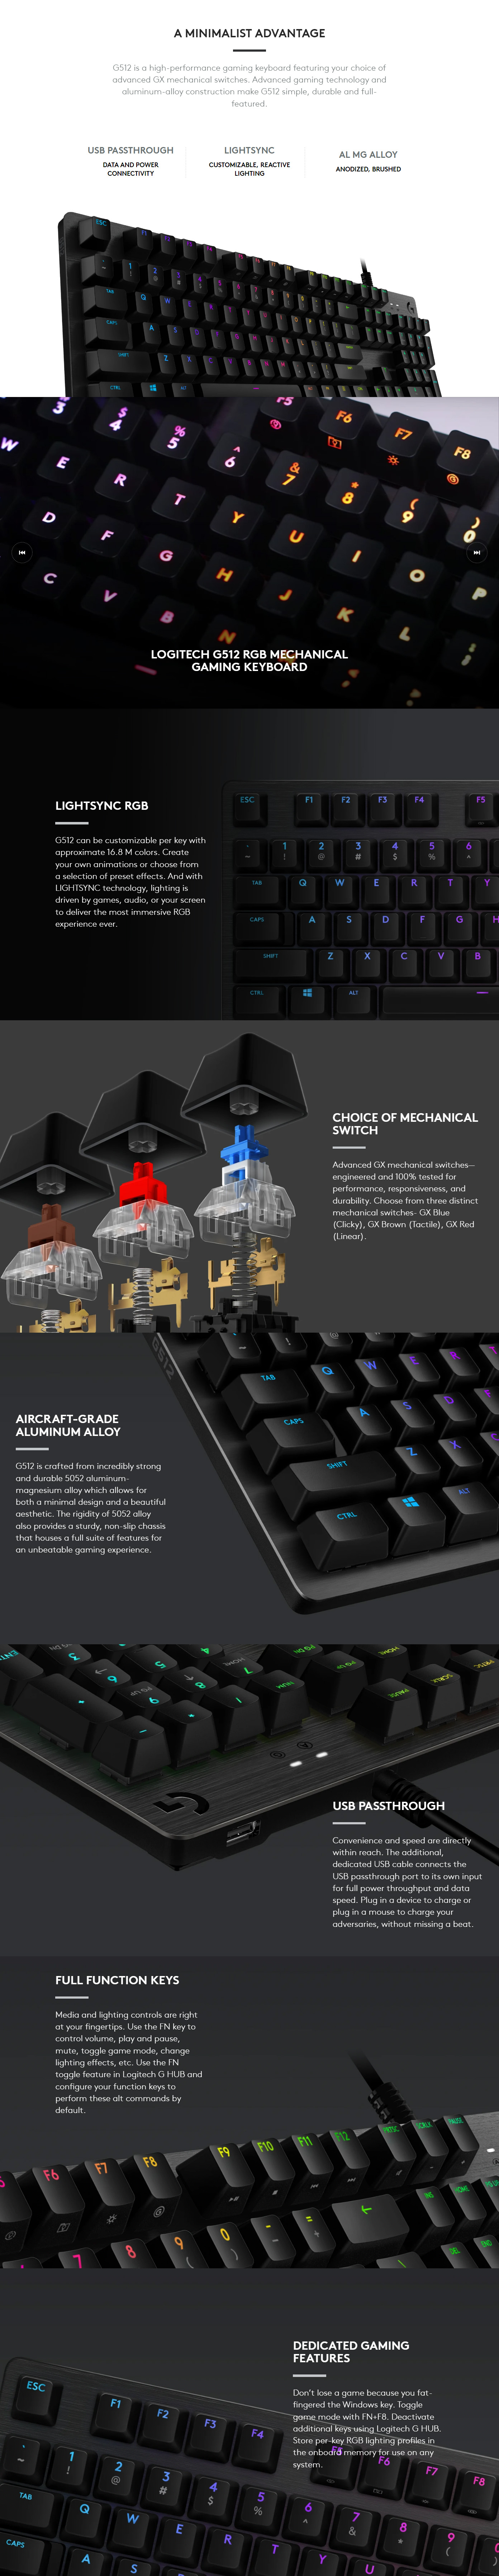 Keyboards-Logitech-G512-Carbon-RGB-Mechanical-Gaming-Keyboard-GX-Red-Switch-1